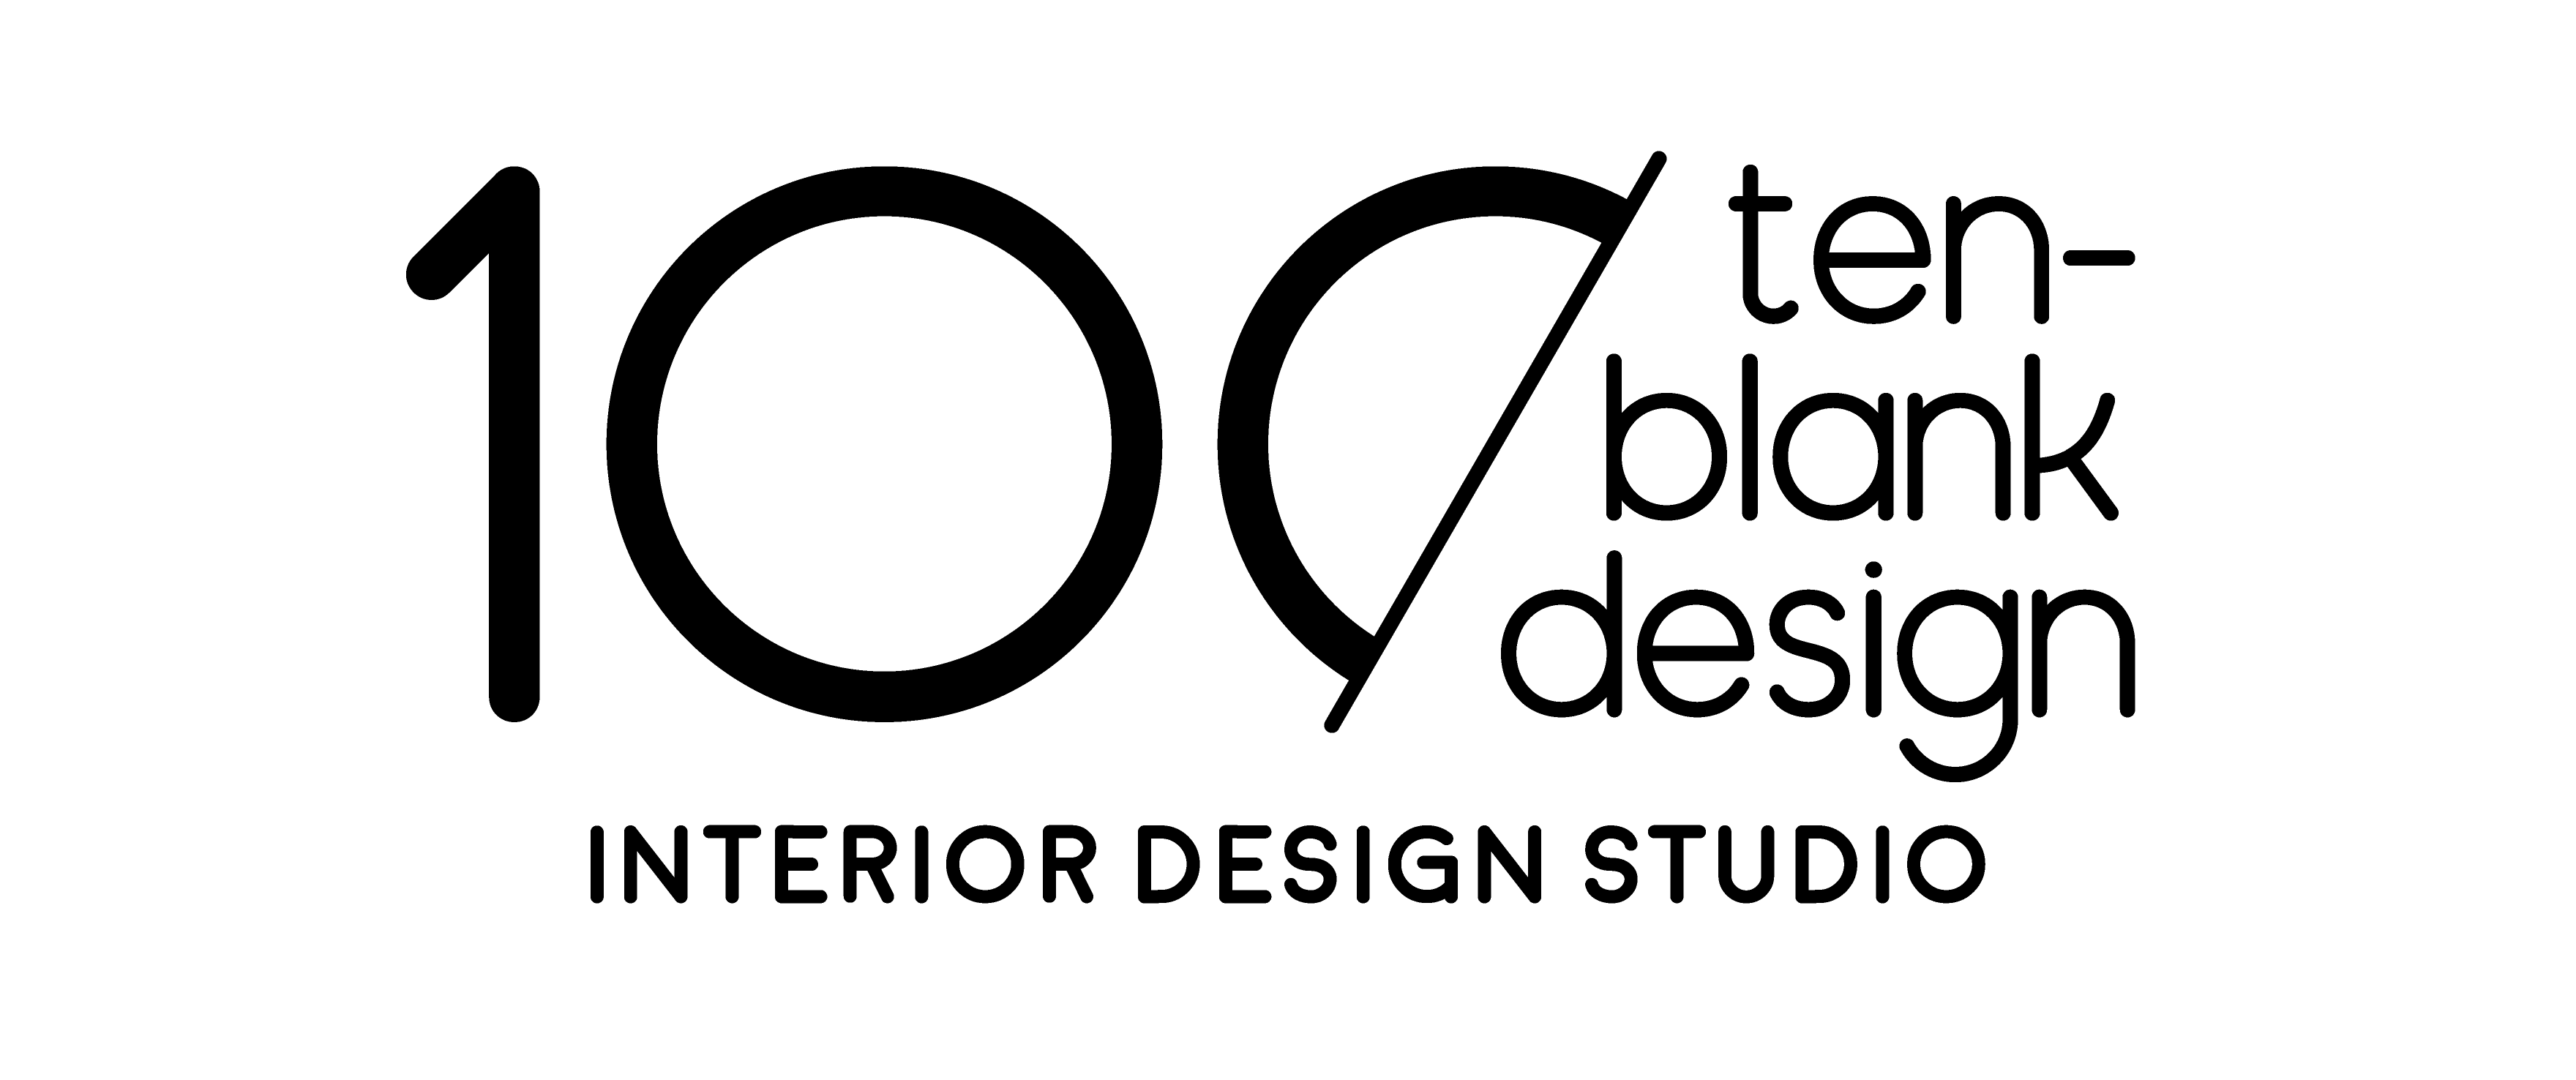 ten-blank design